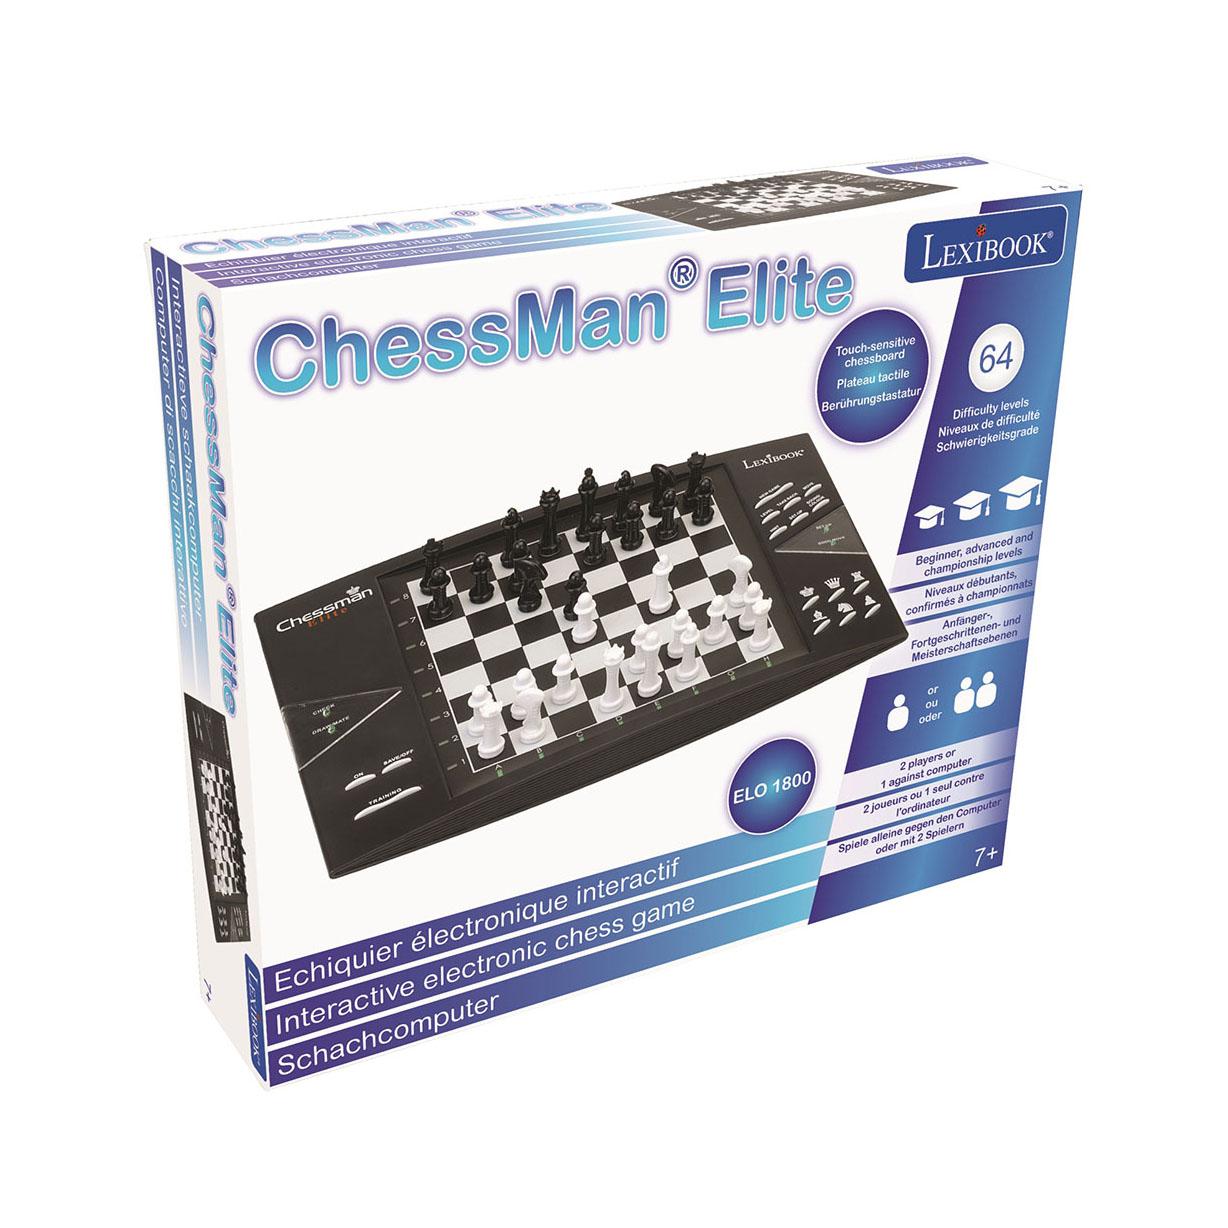 Jogo de xadrez de luxo, jogo de xadrez eletrónico de interação